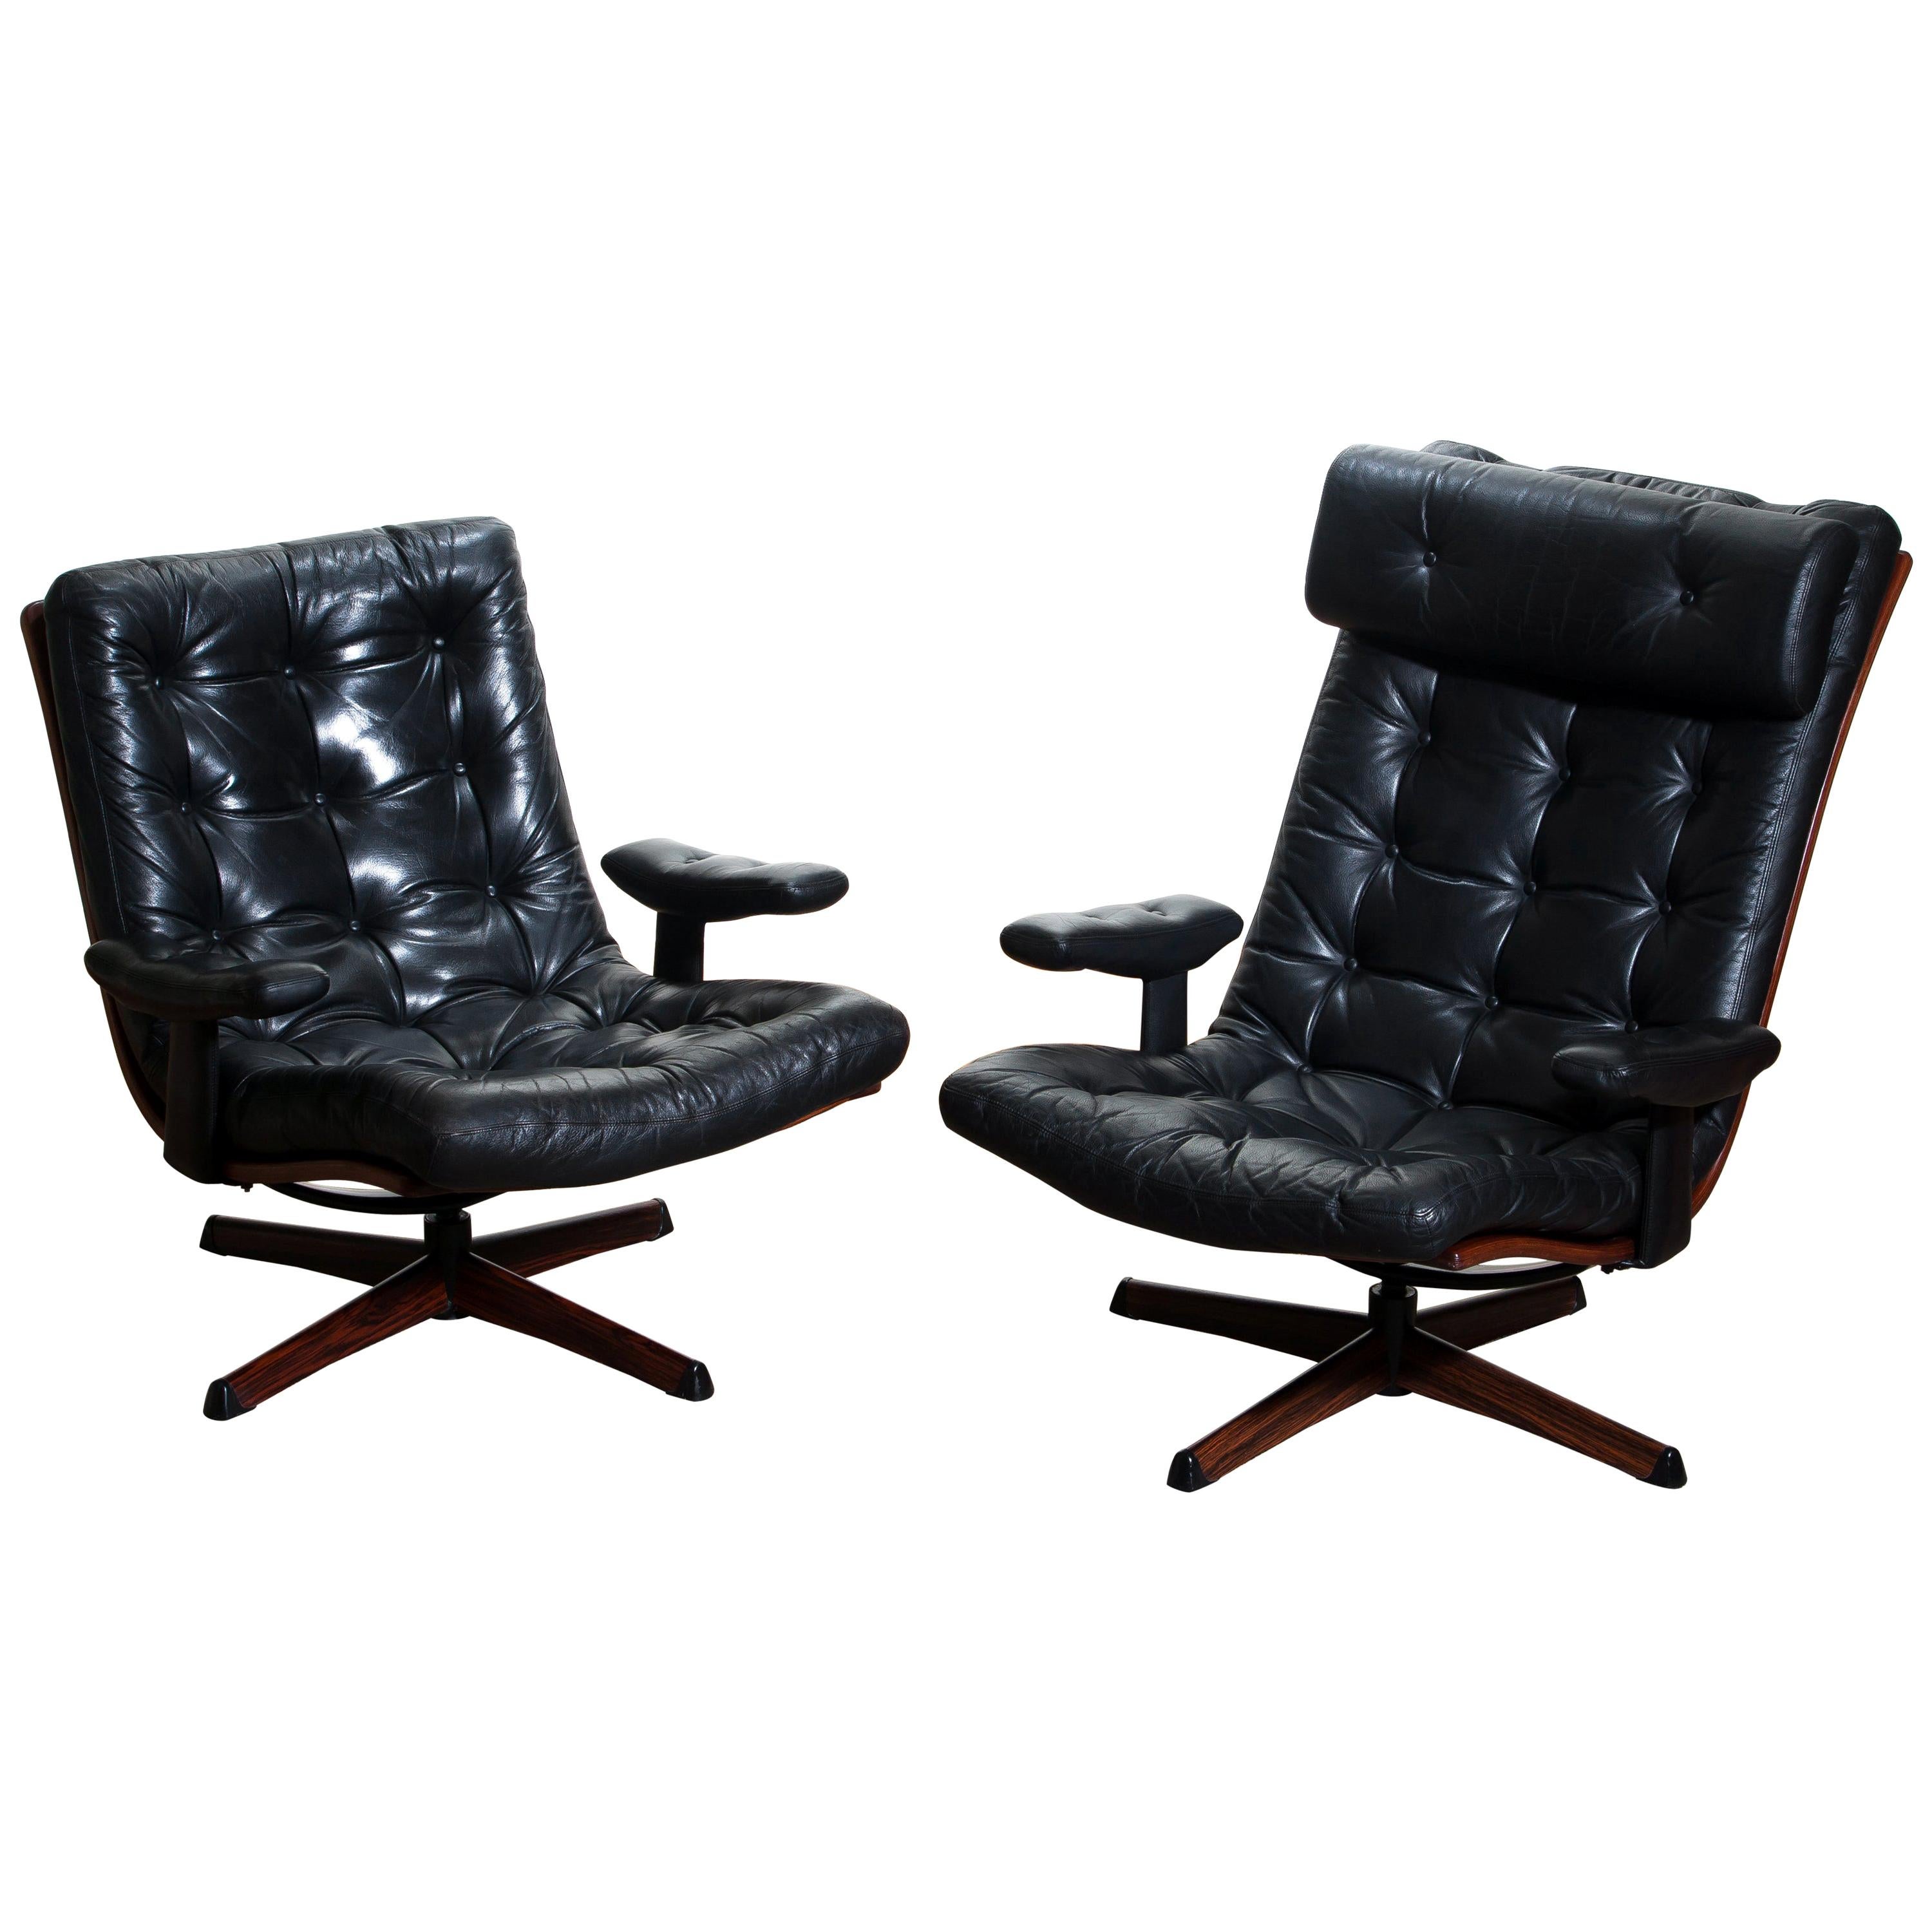 Swedish 1960s Matching Pair of Black Leather Swivel Chairs by Göte M�öbler Nässjö, Sweden